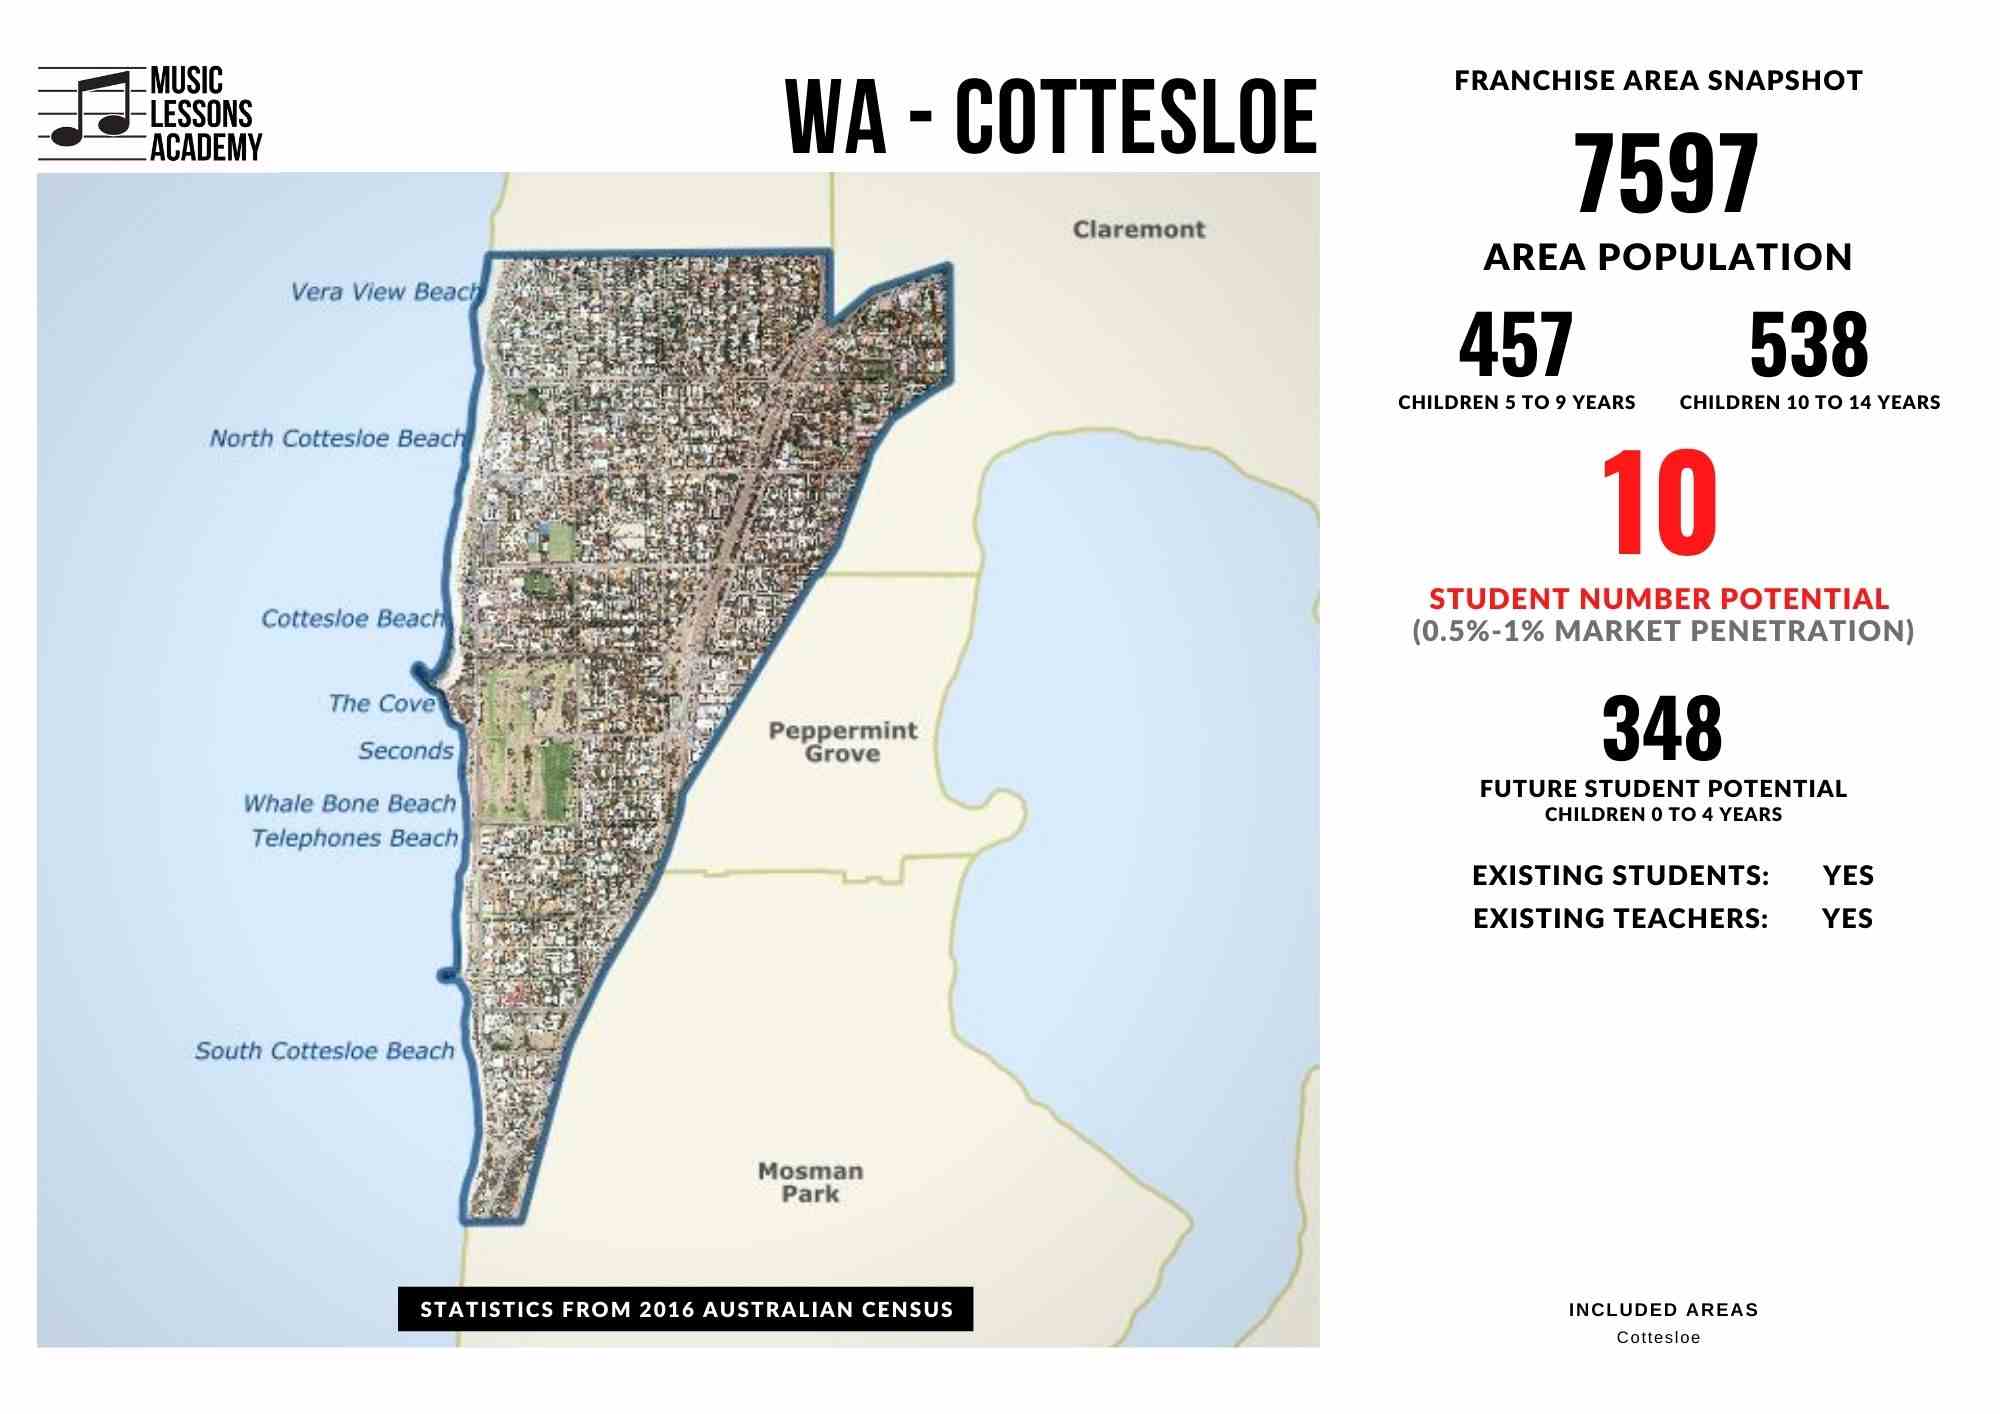 WA Cottesloe Franchise for sale